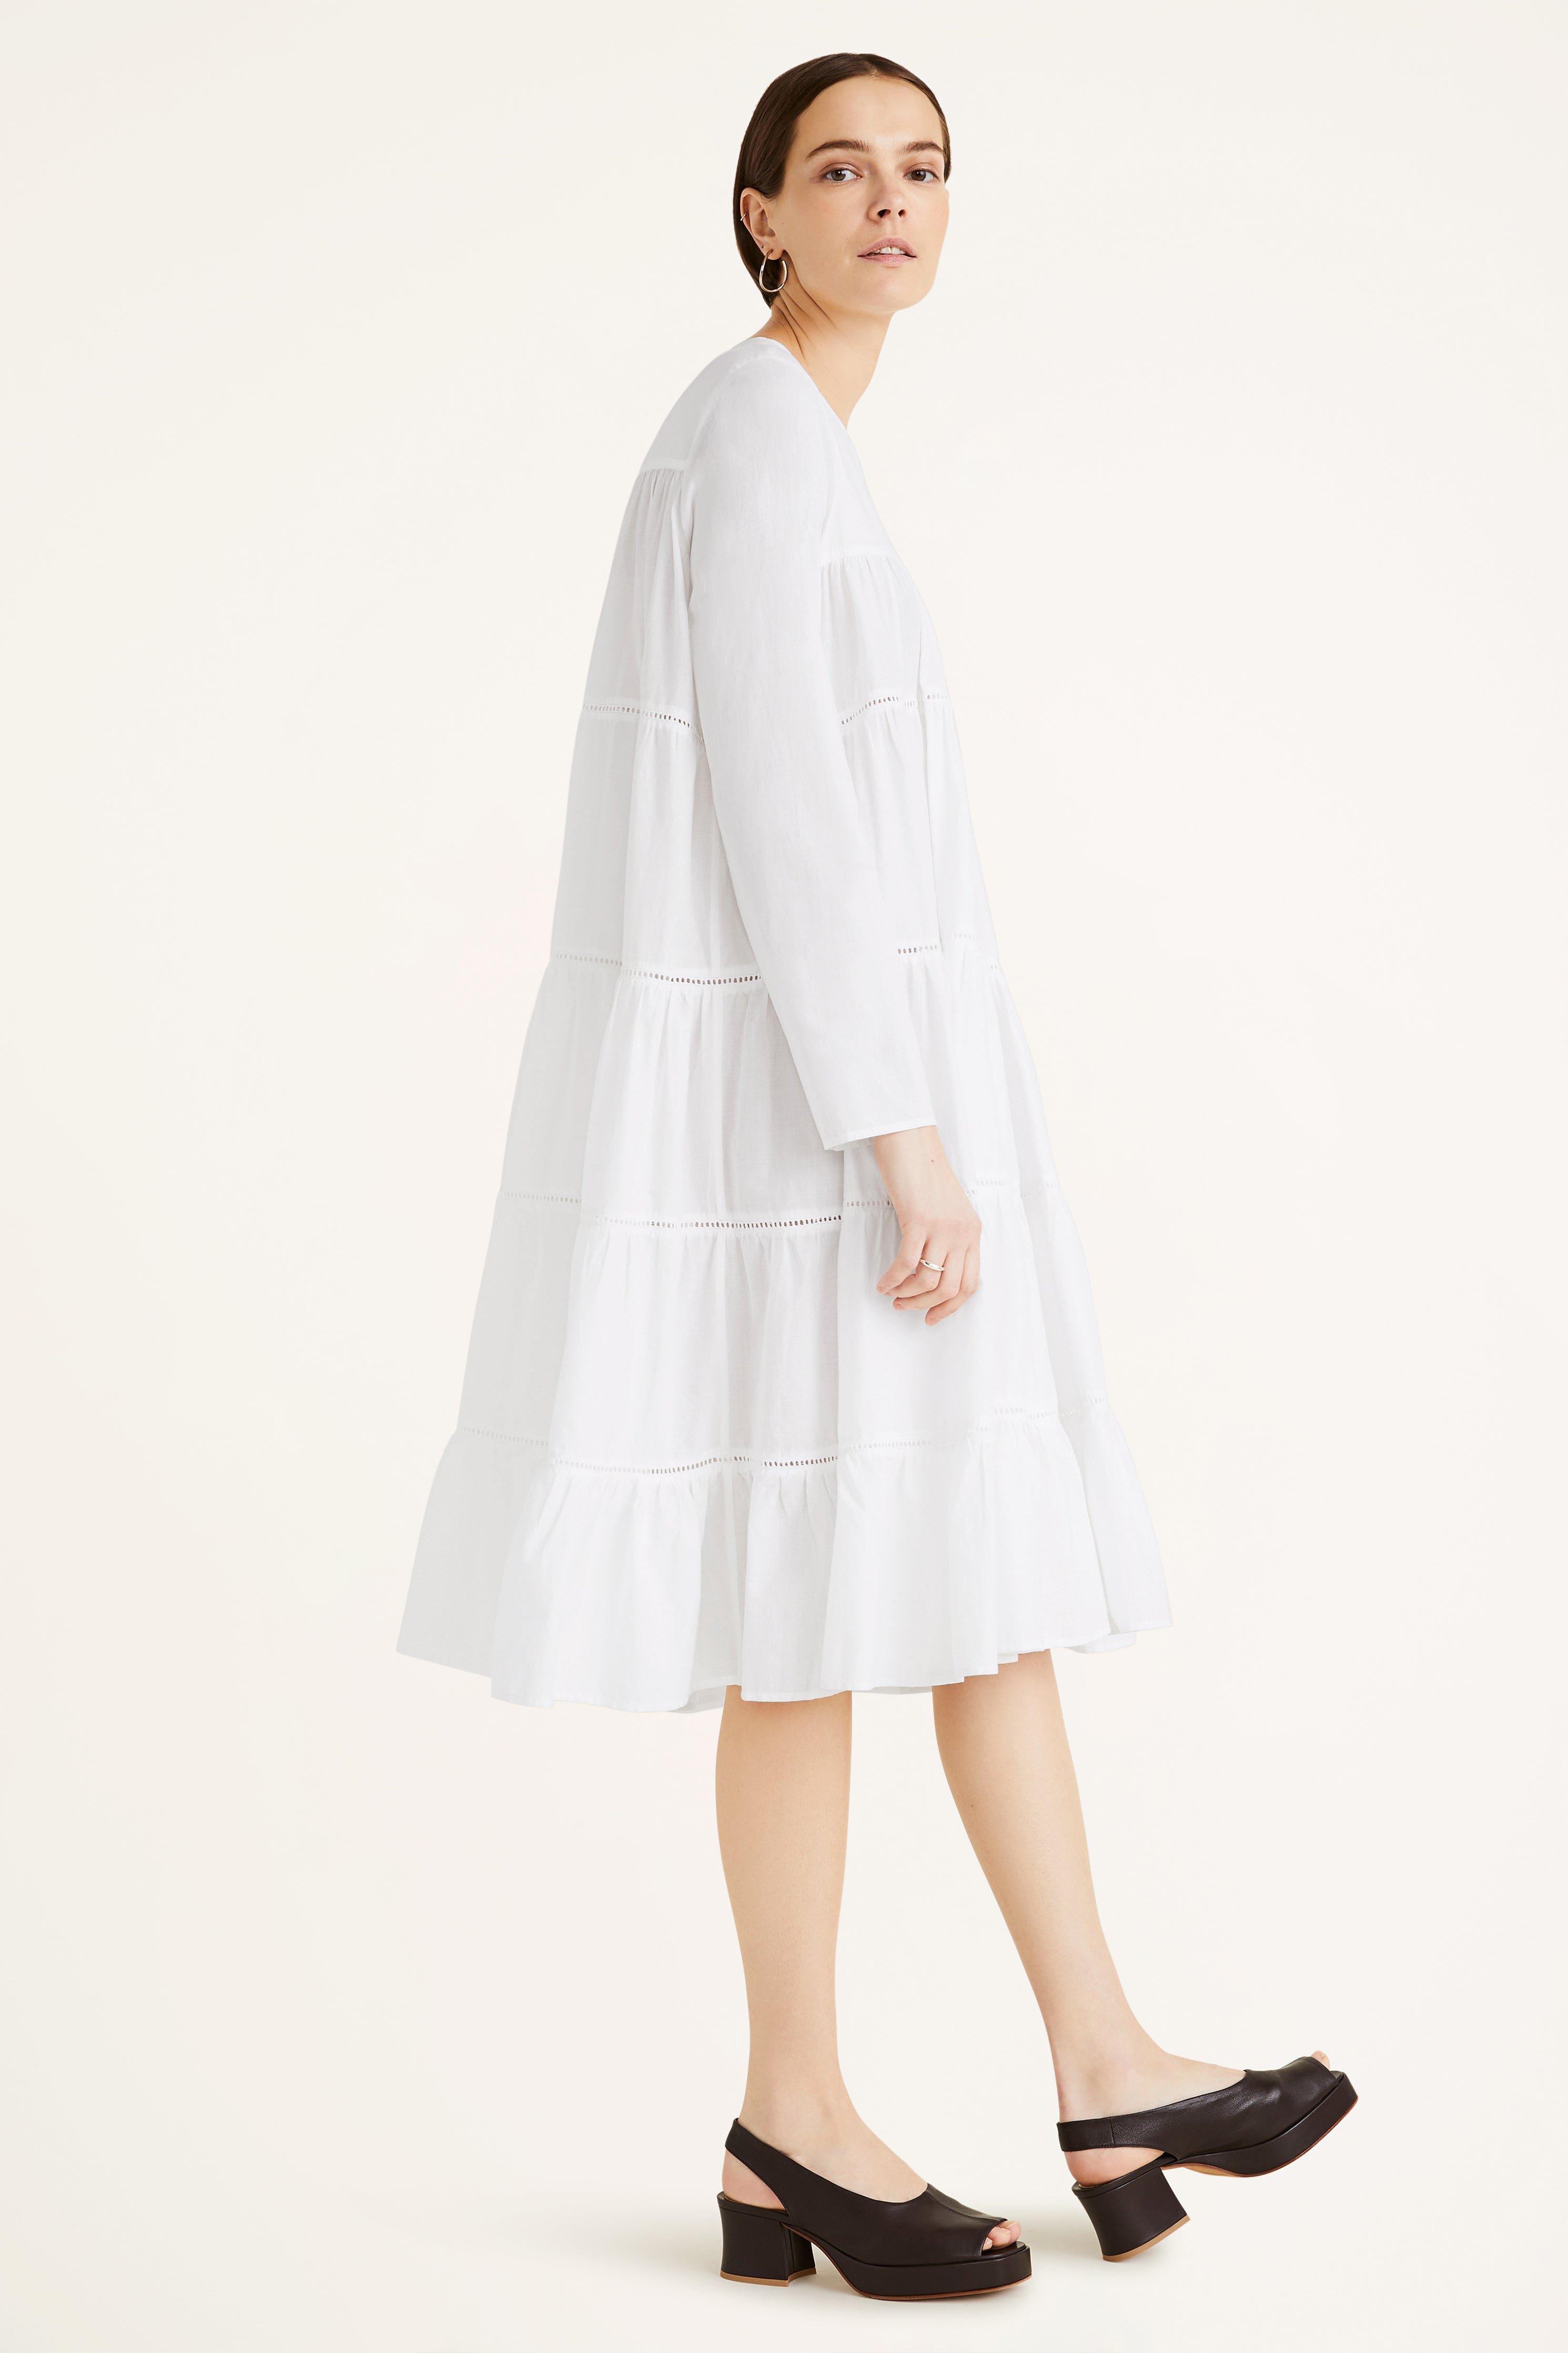 merlette ESSAOUIRA DRESS サイズS ホワイト